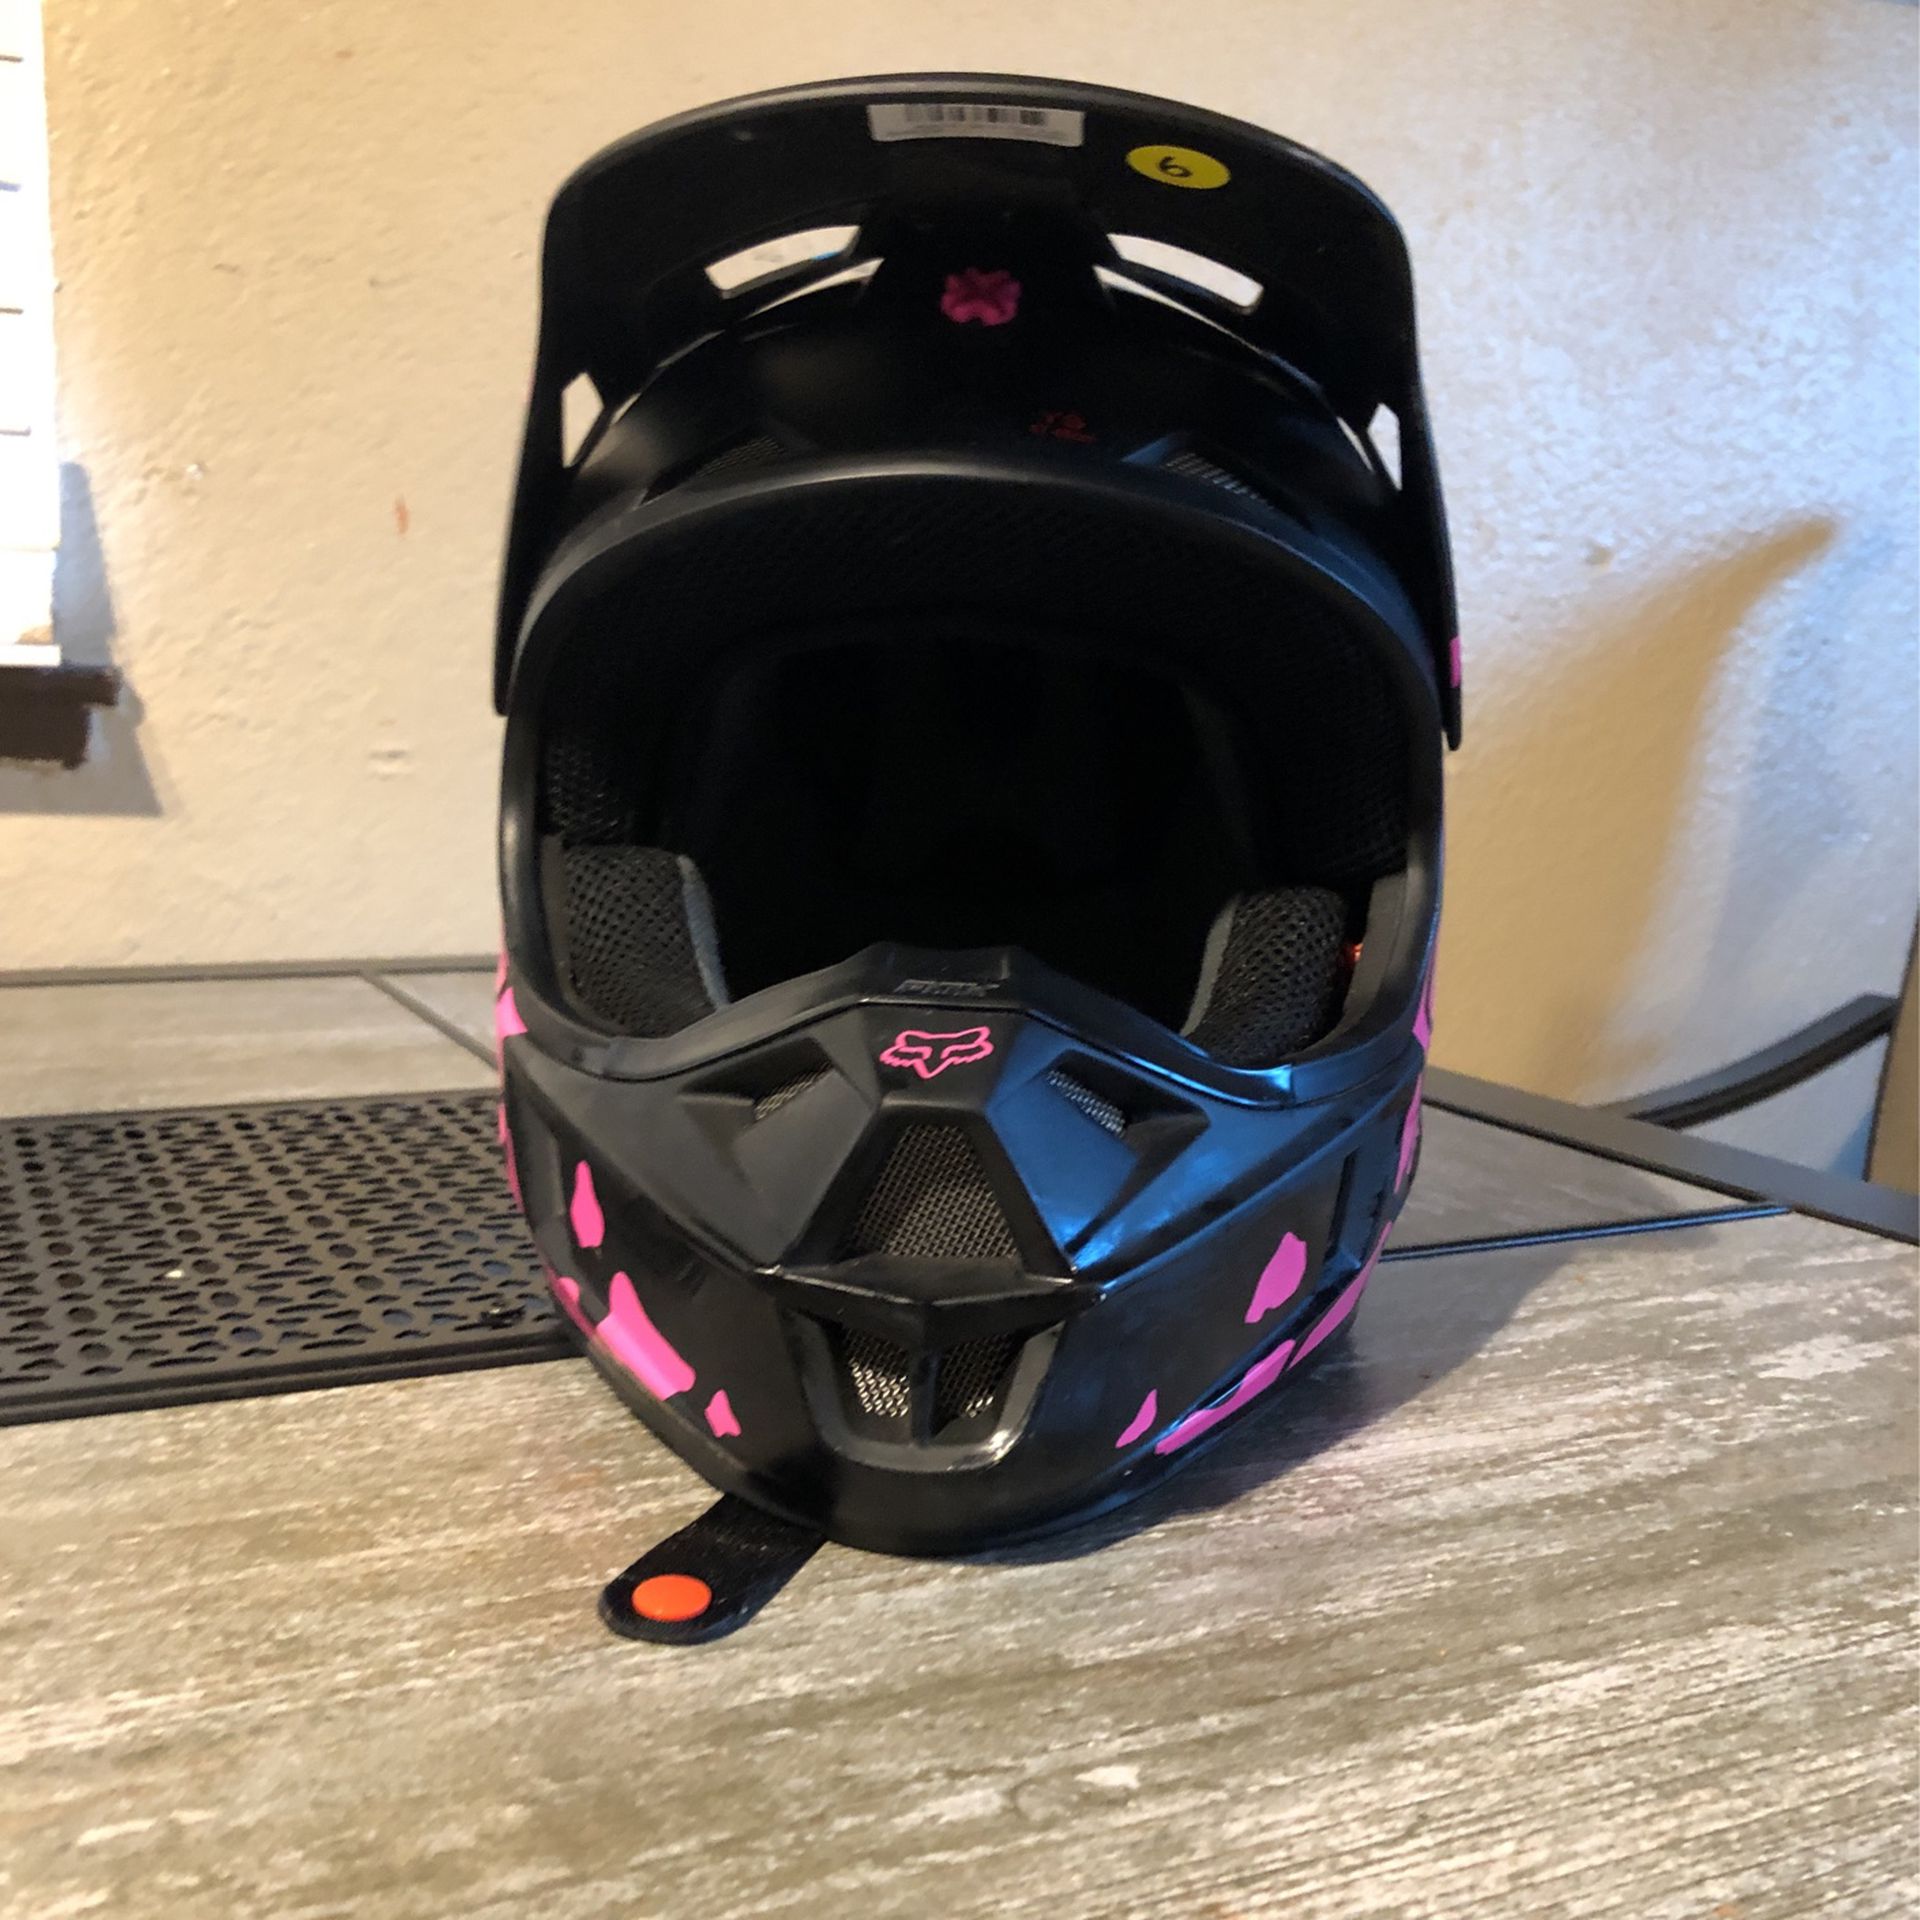 Seeking A Dirt Bike Helmet It’s Brand New Only Used 3 Times 